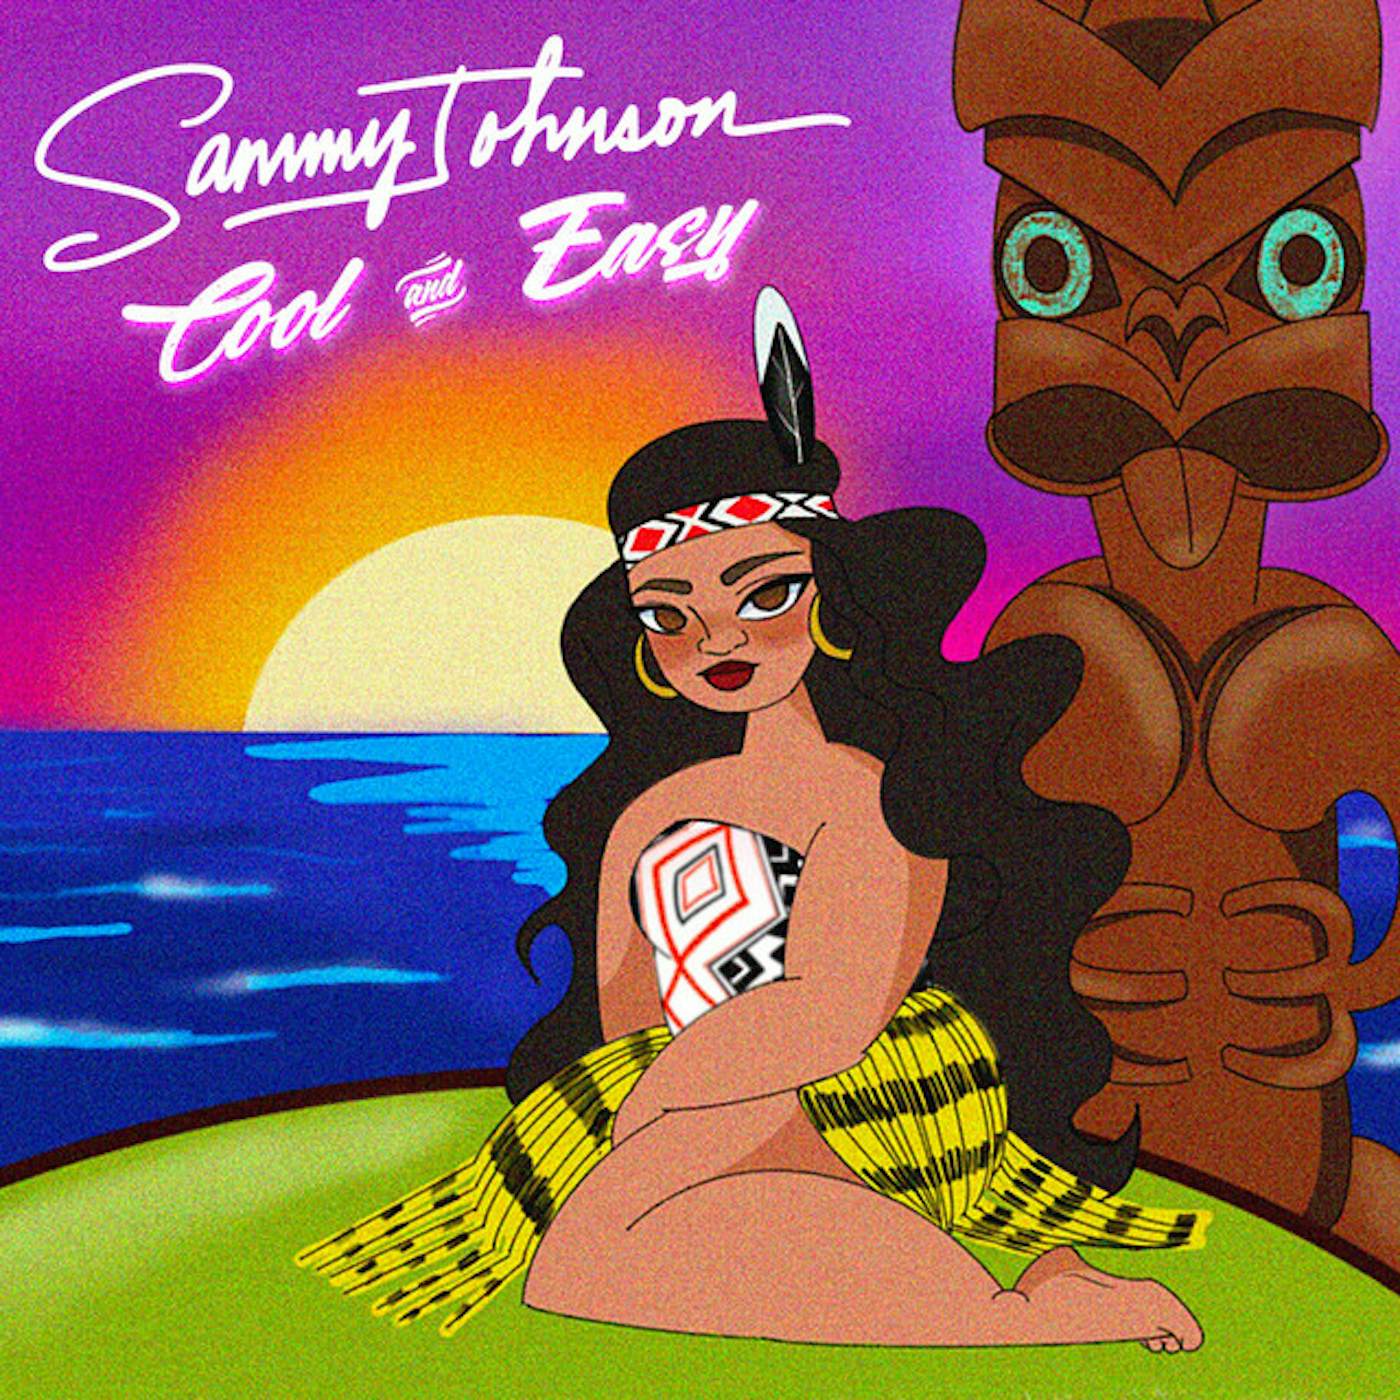 Sammy Johnson COOL & EASY CD